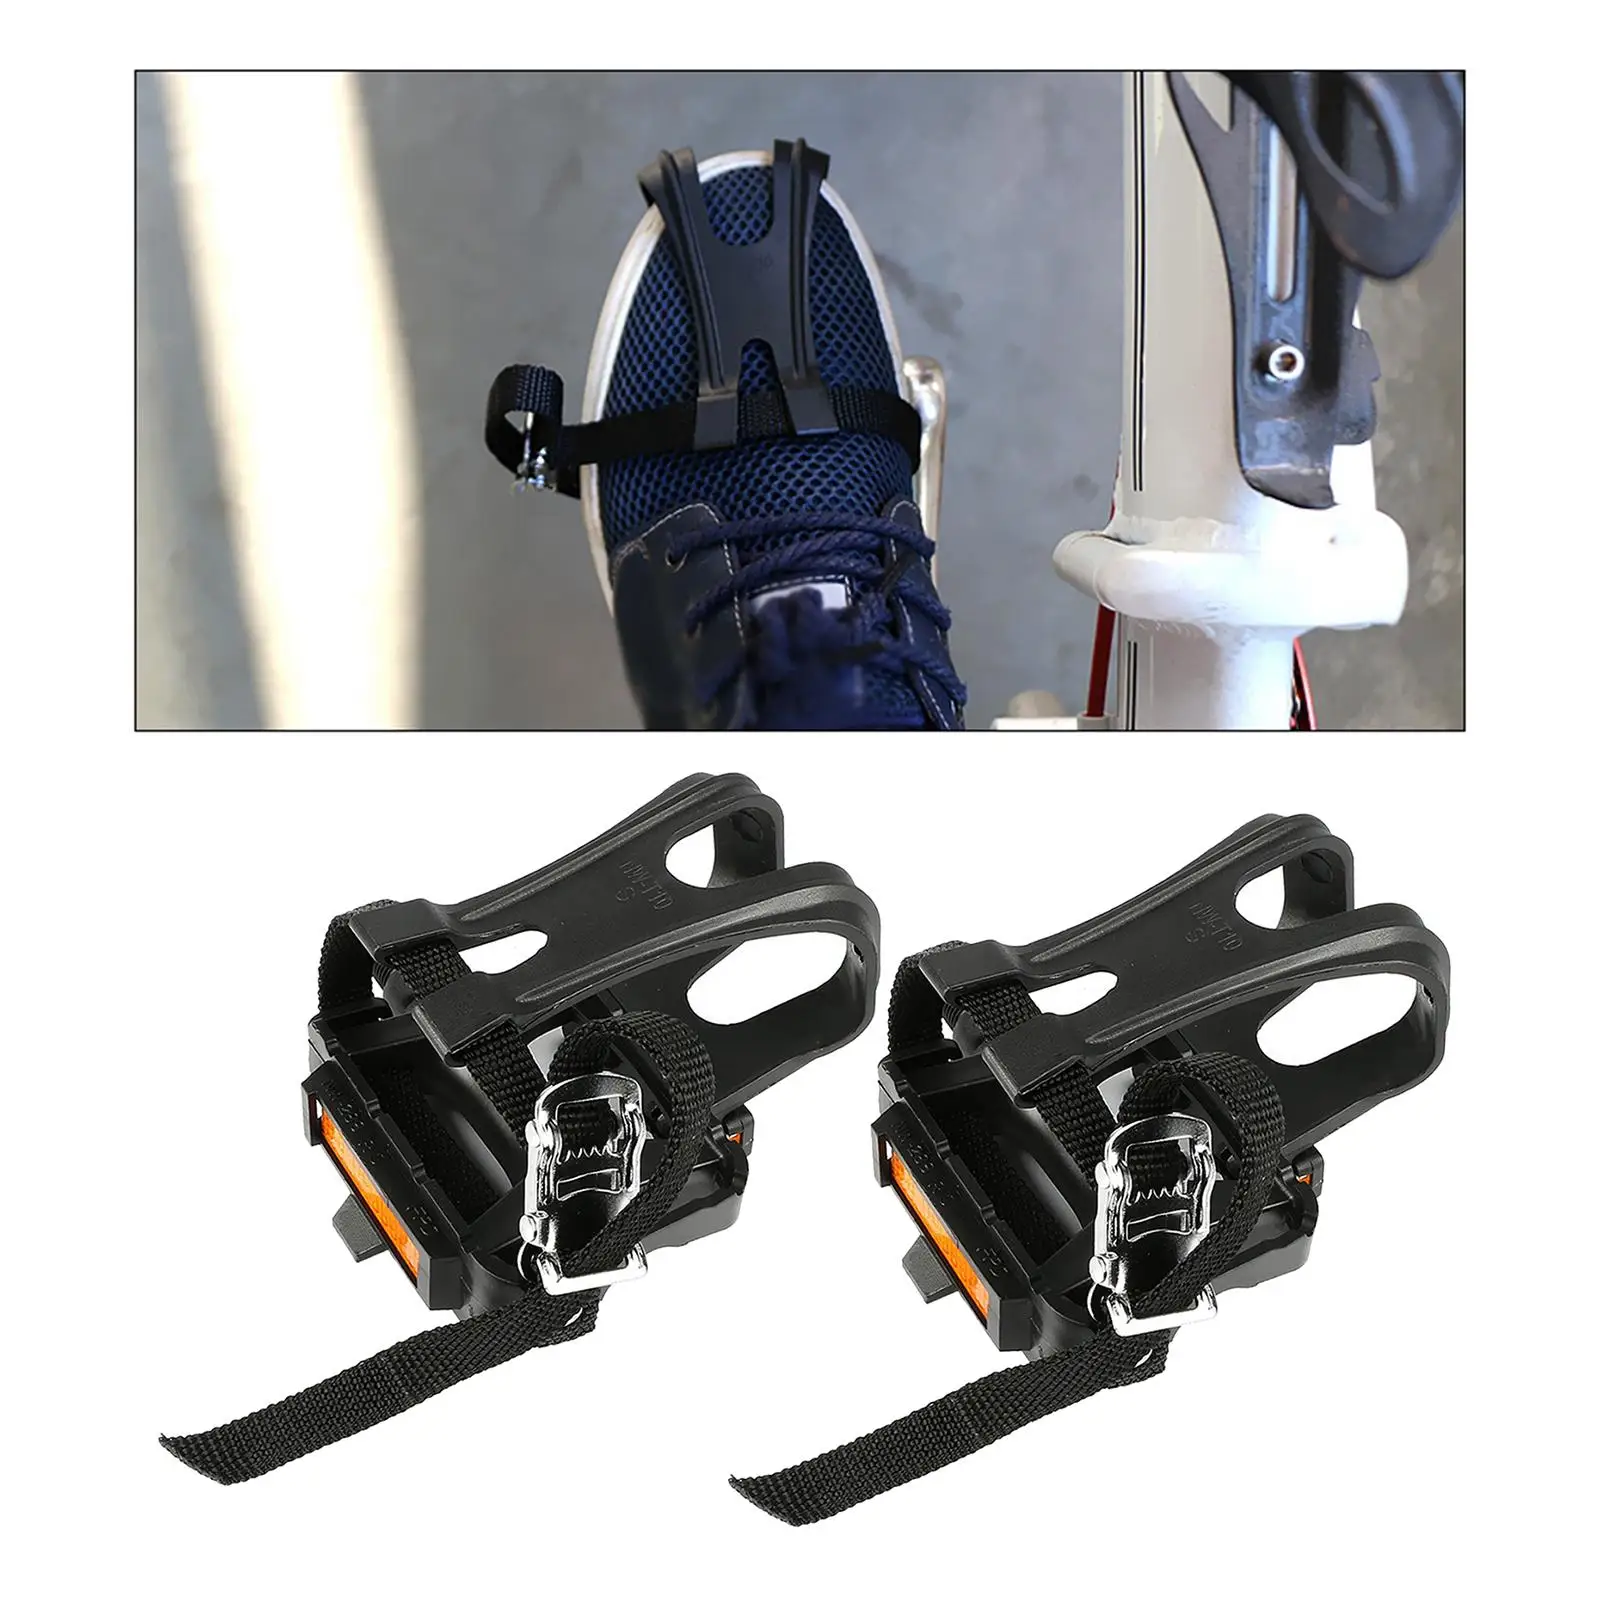 1 Pair Nylon Cycling Bike Pedal Toe Clip Strap Belts for Fixed Bike